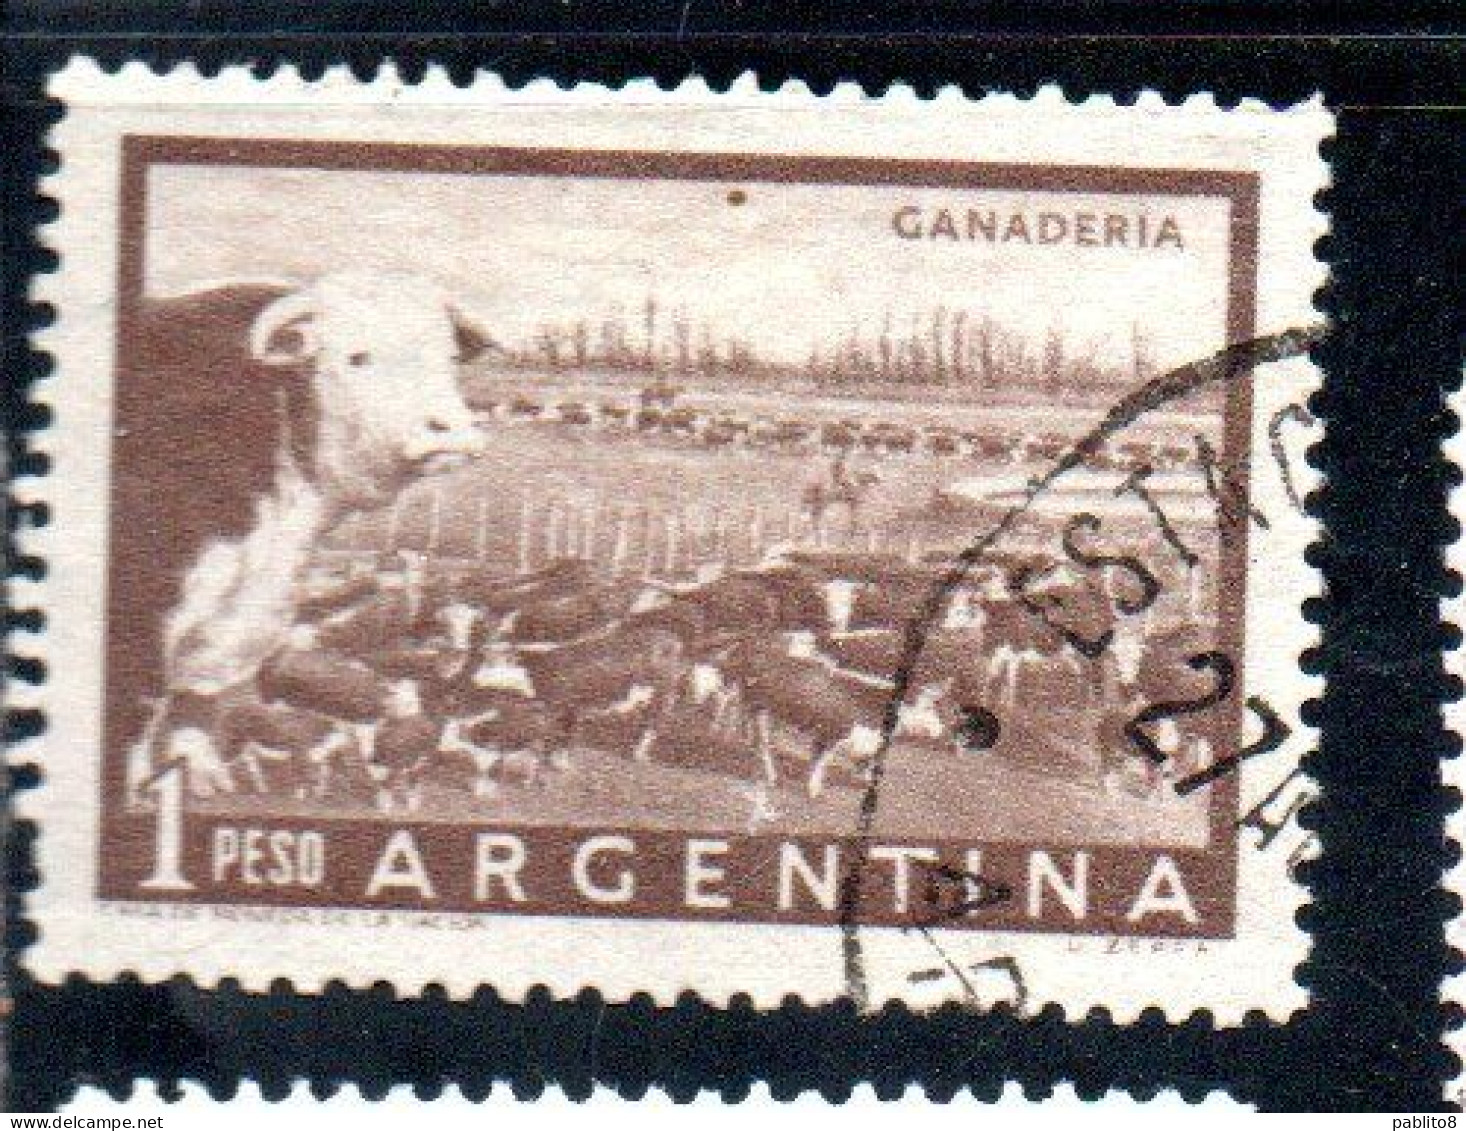 ARGENTINA 1954 1959 1958 CATTLE RANCH GANADERIA 1p USED USADO OBLITERE' - Usados